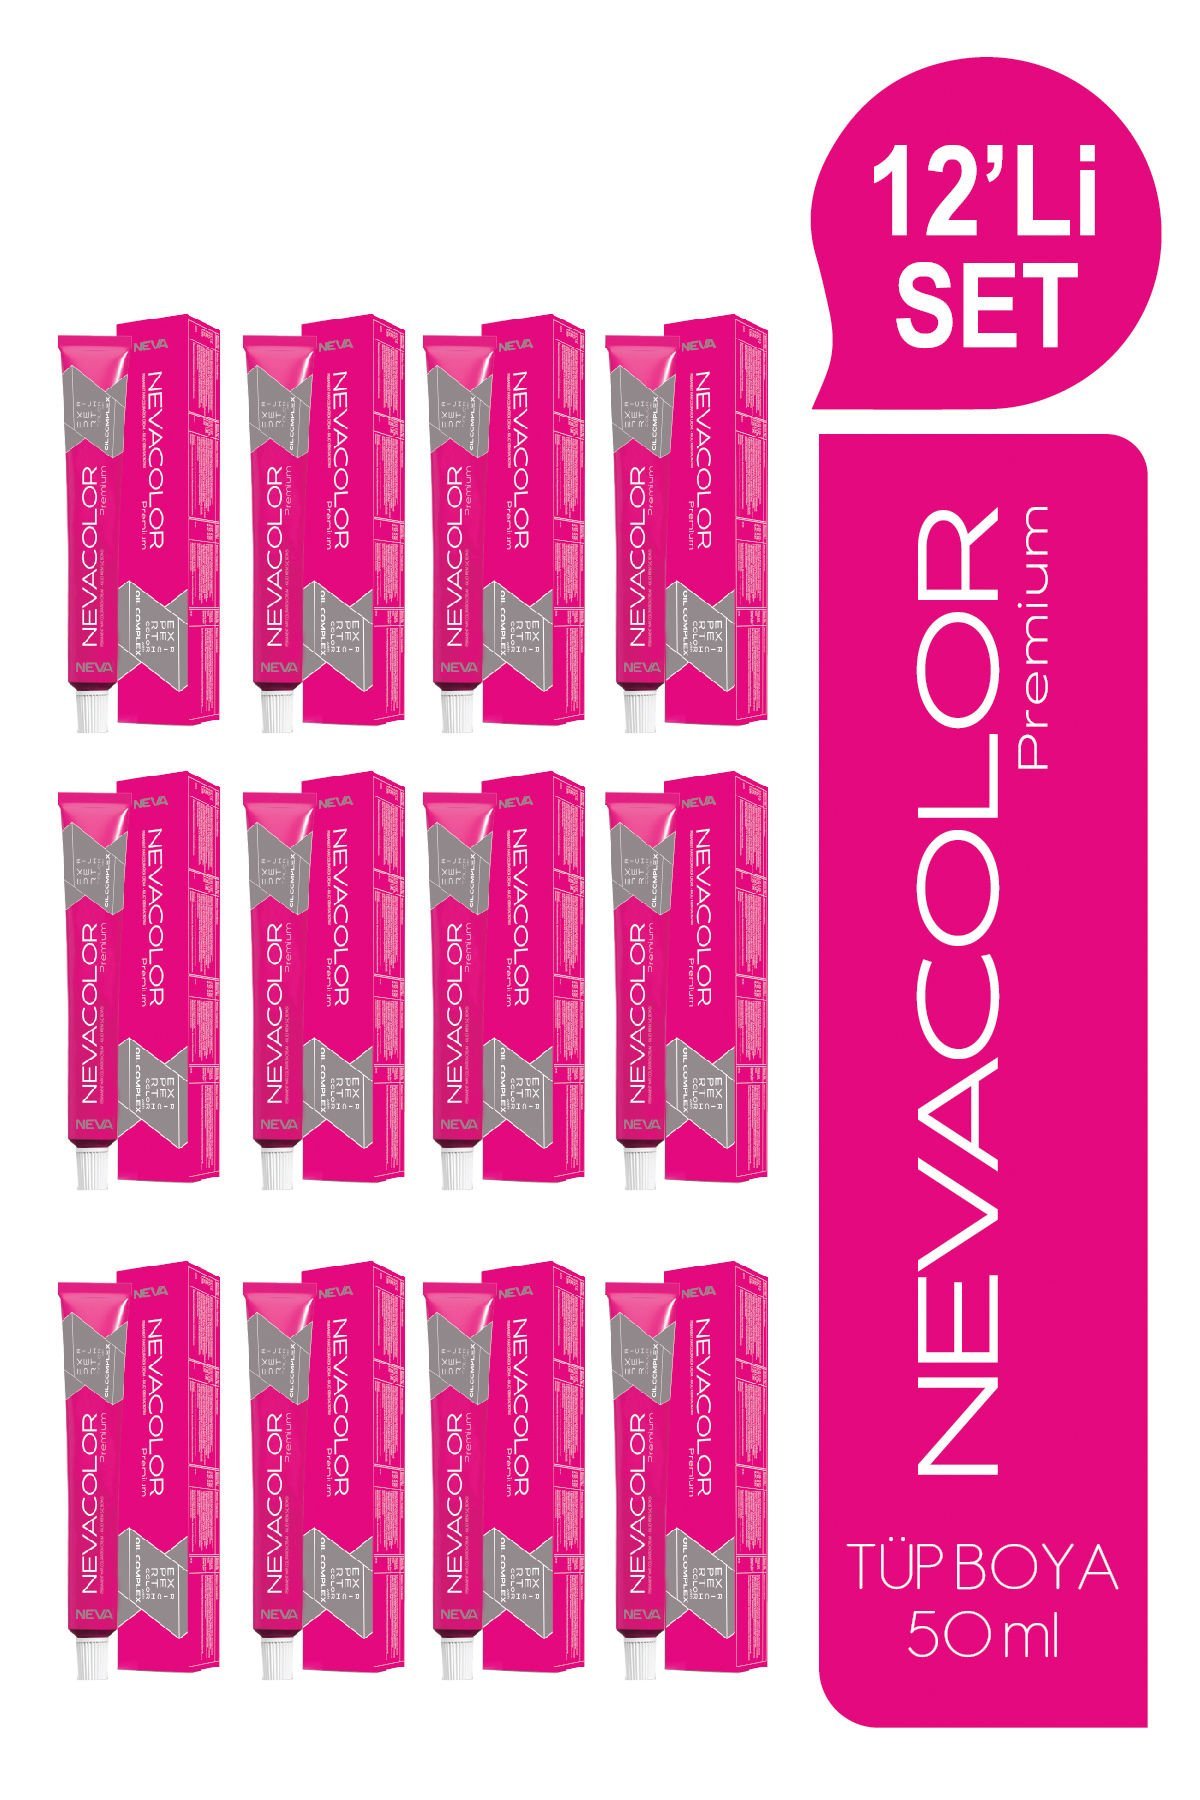 NEVACOLOR Premium 12'Lİ SET  5.1 KÜLLÜ AÇ.KAHVE Kalıcı Krem Saç Boyası (50ml x 12 adet)